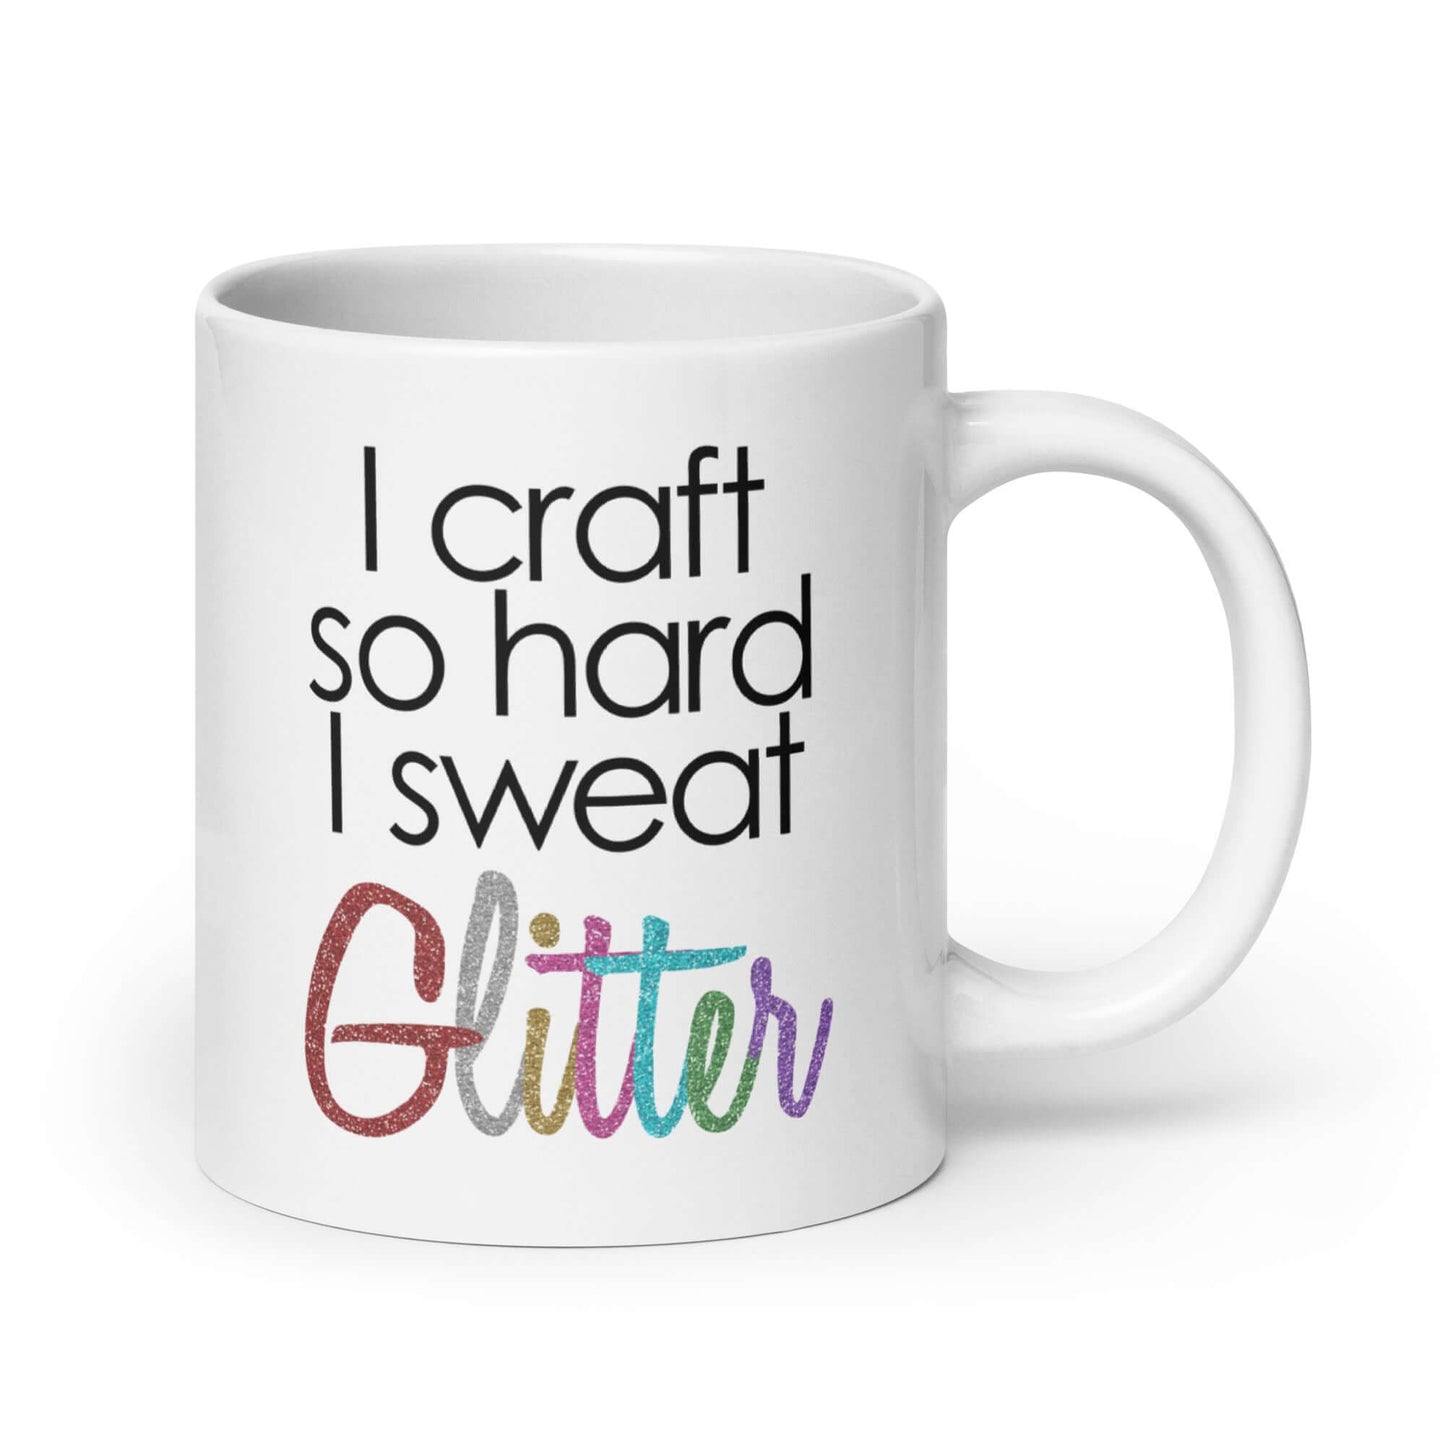 Funny mug for crafters. I craft so hard I sweat glitter.